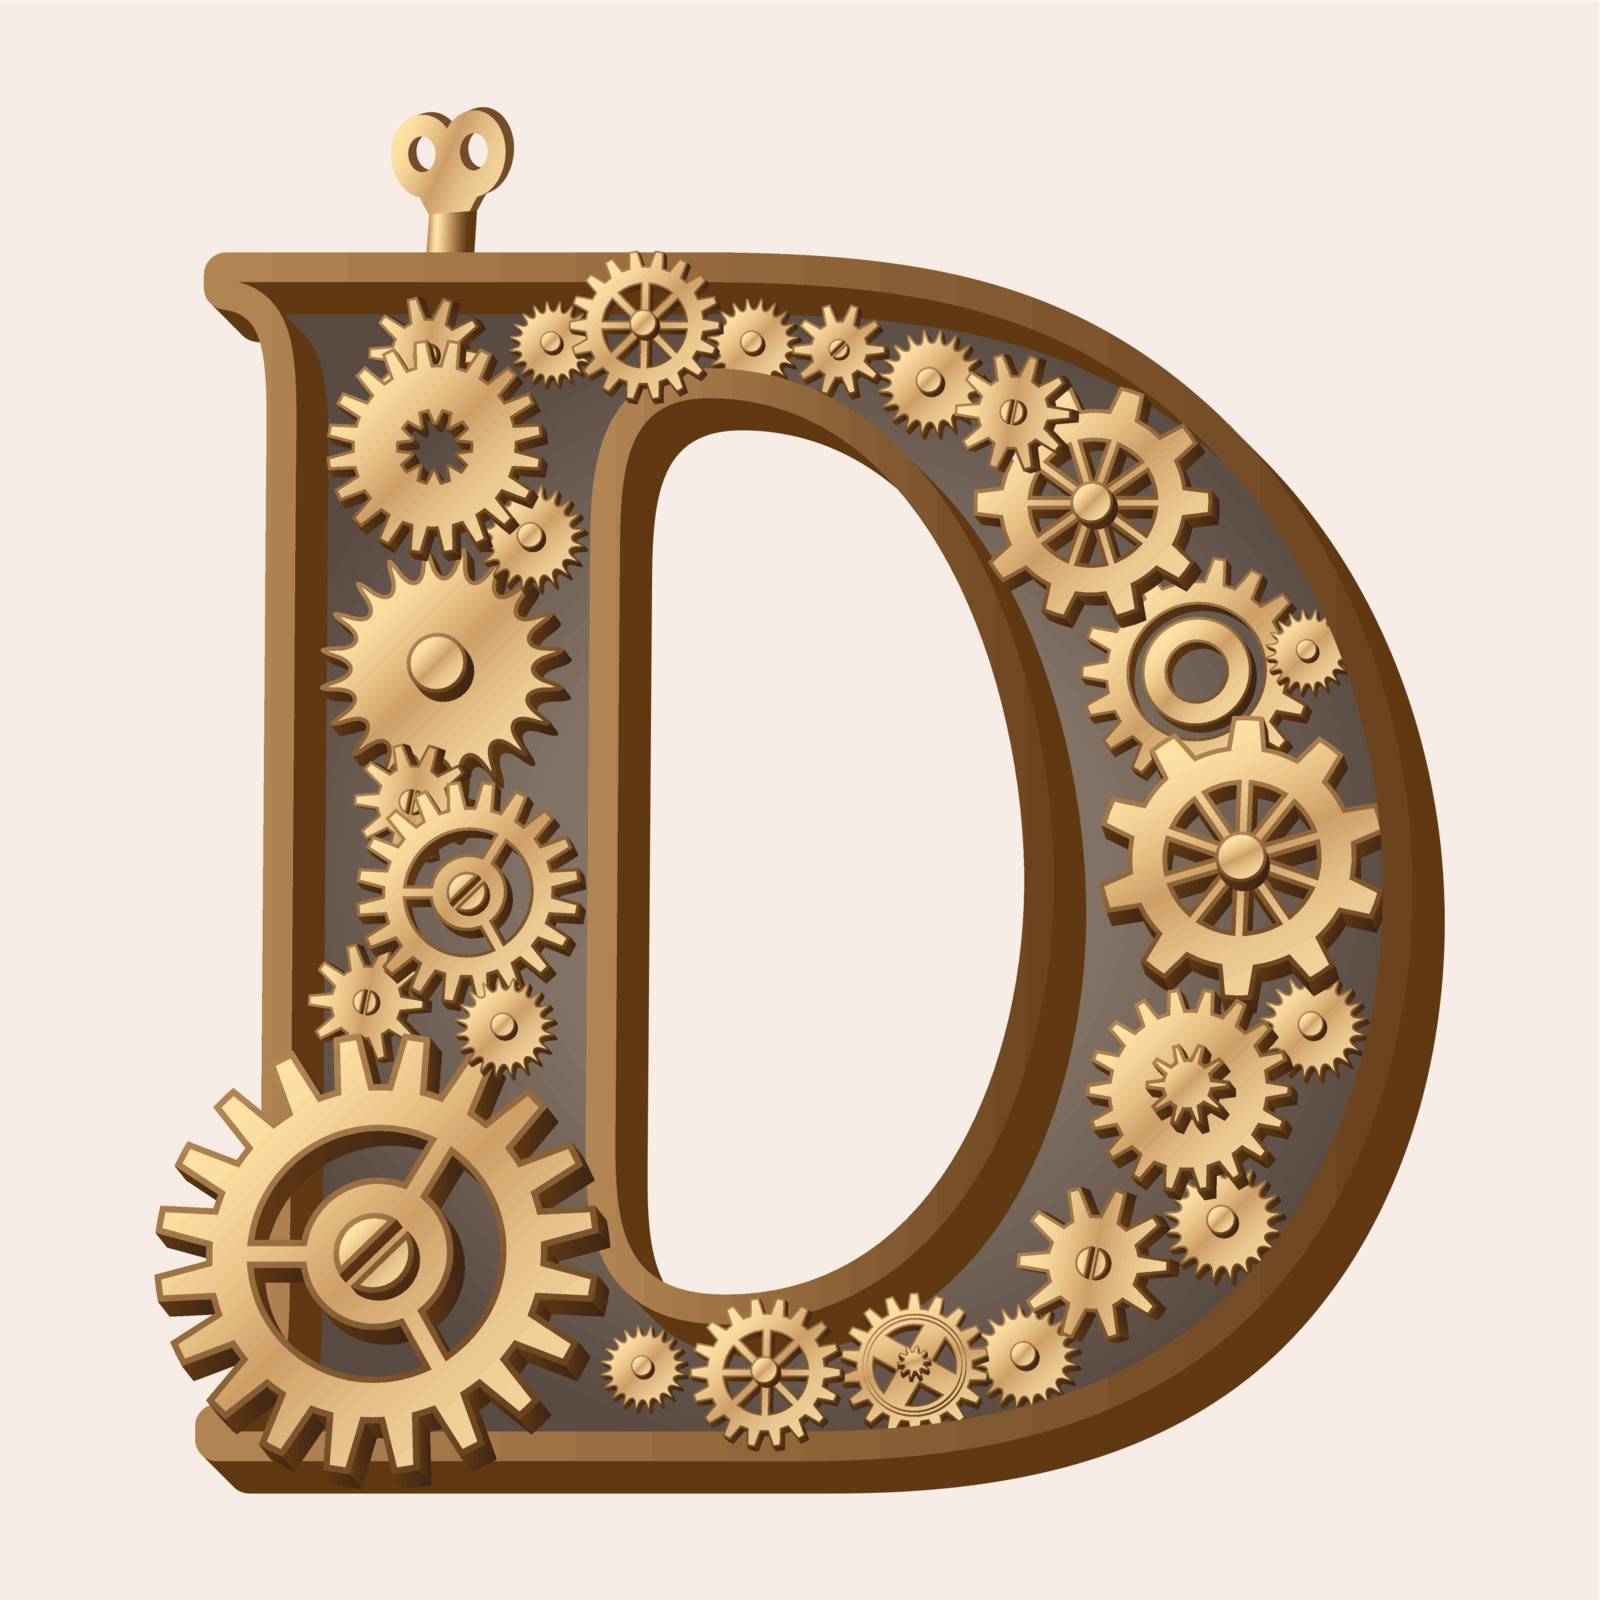 Mechanical alphabet by Elenita